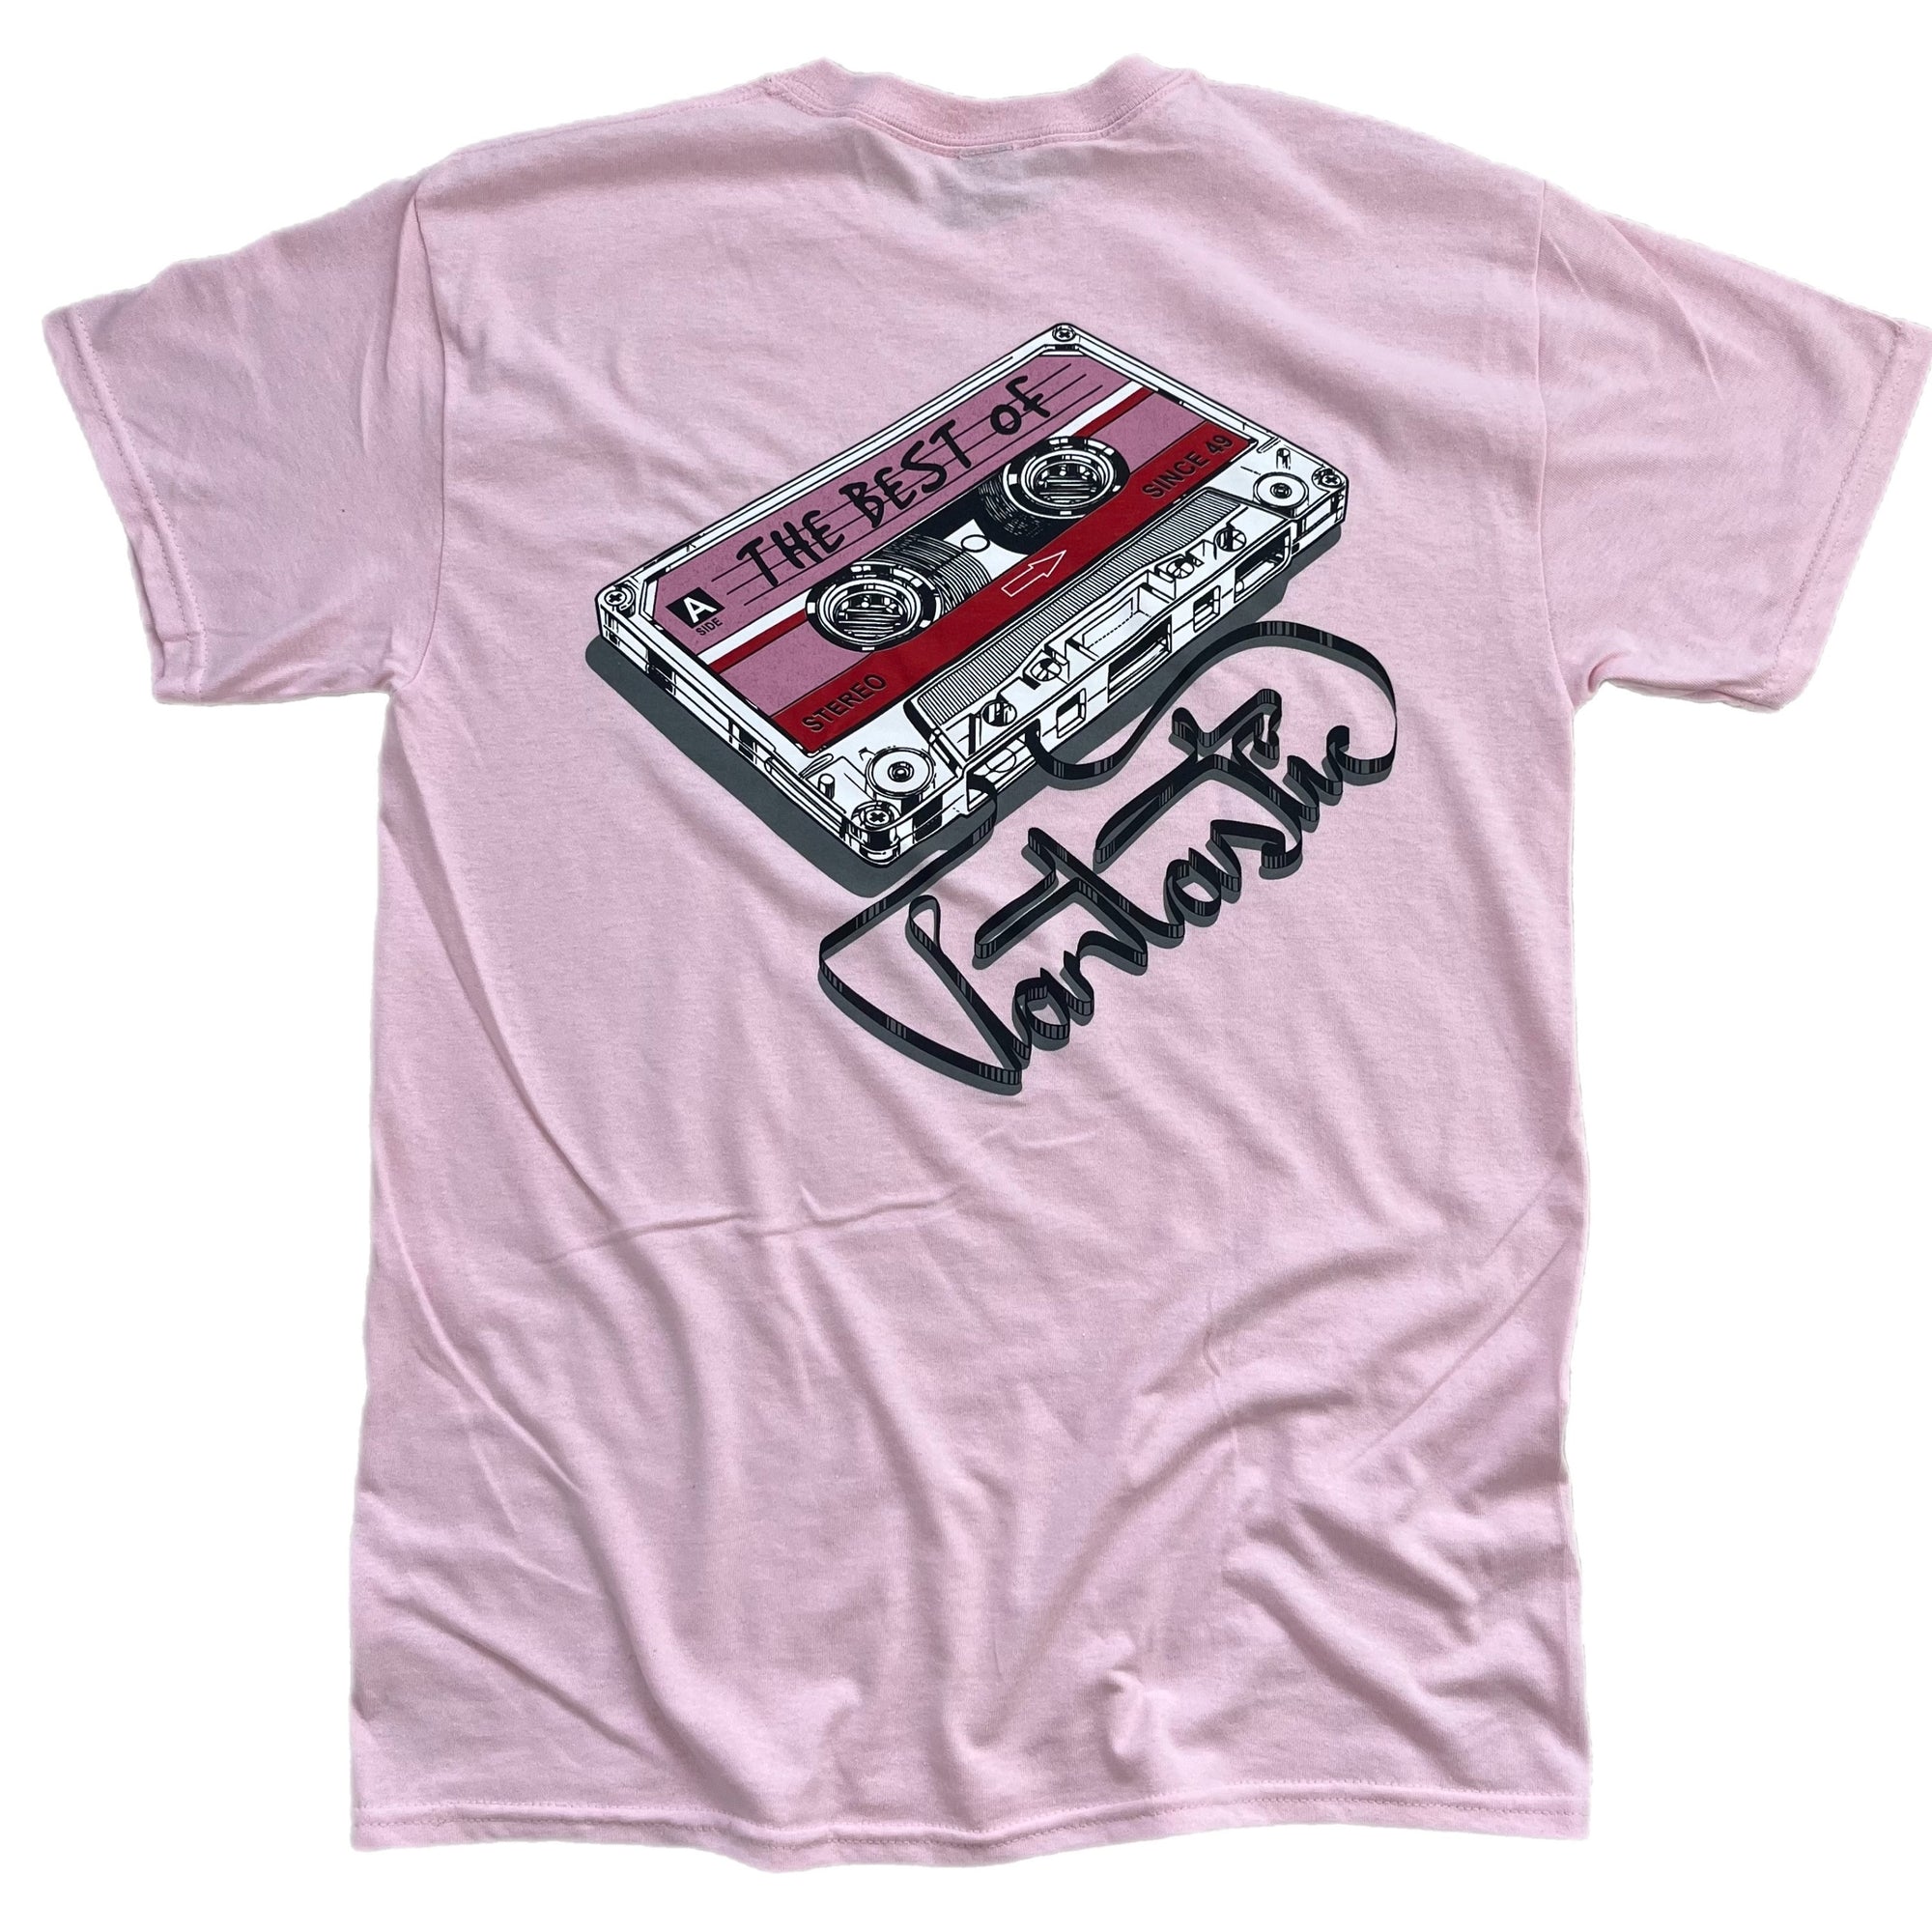 Mix Tape Short Sleeve T-shirt - Baby Pink